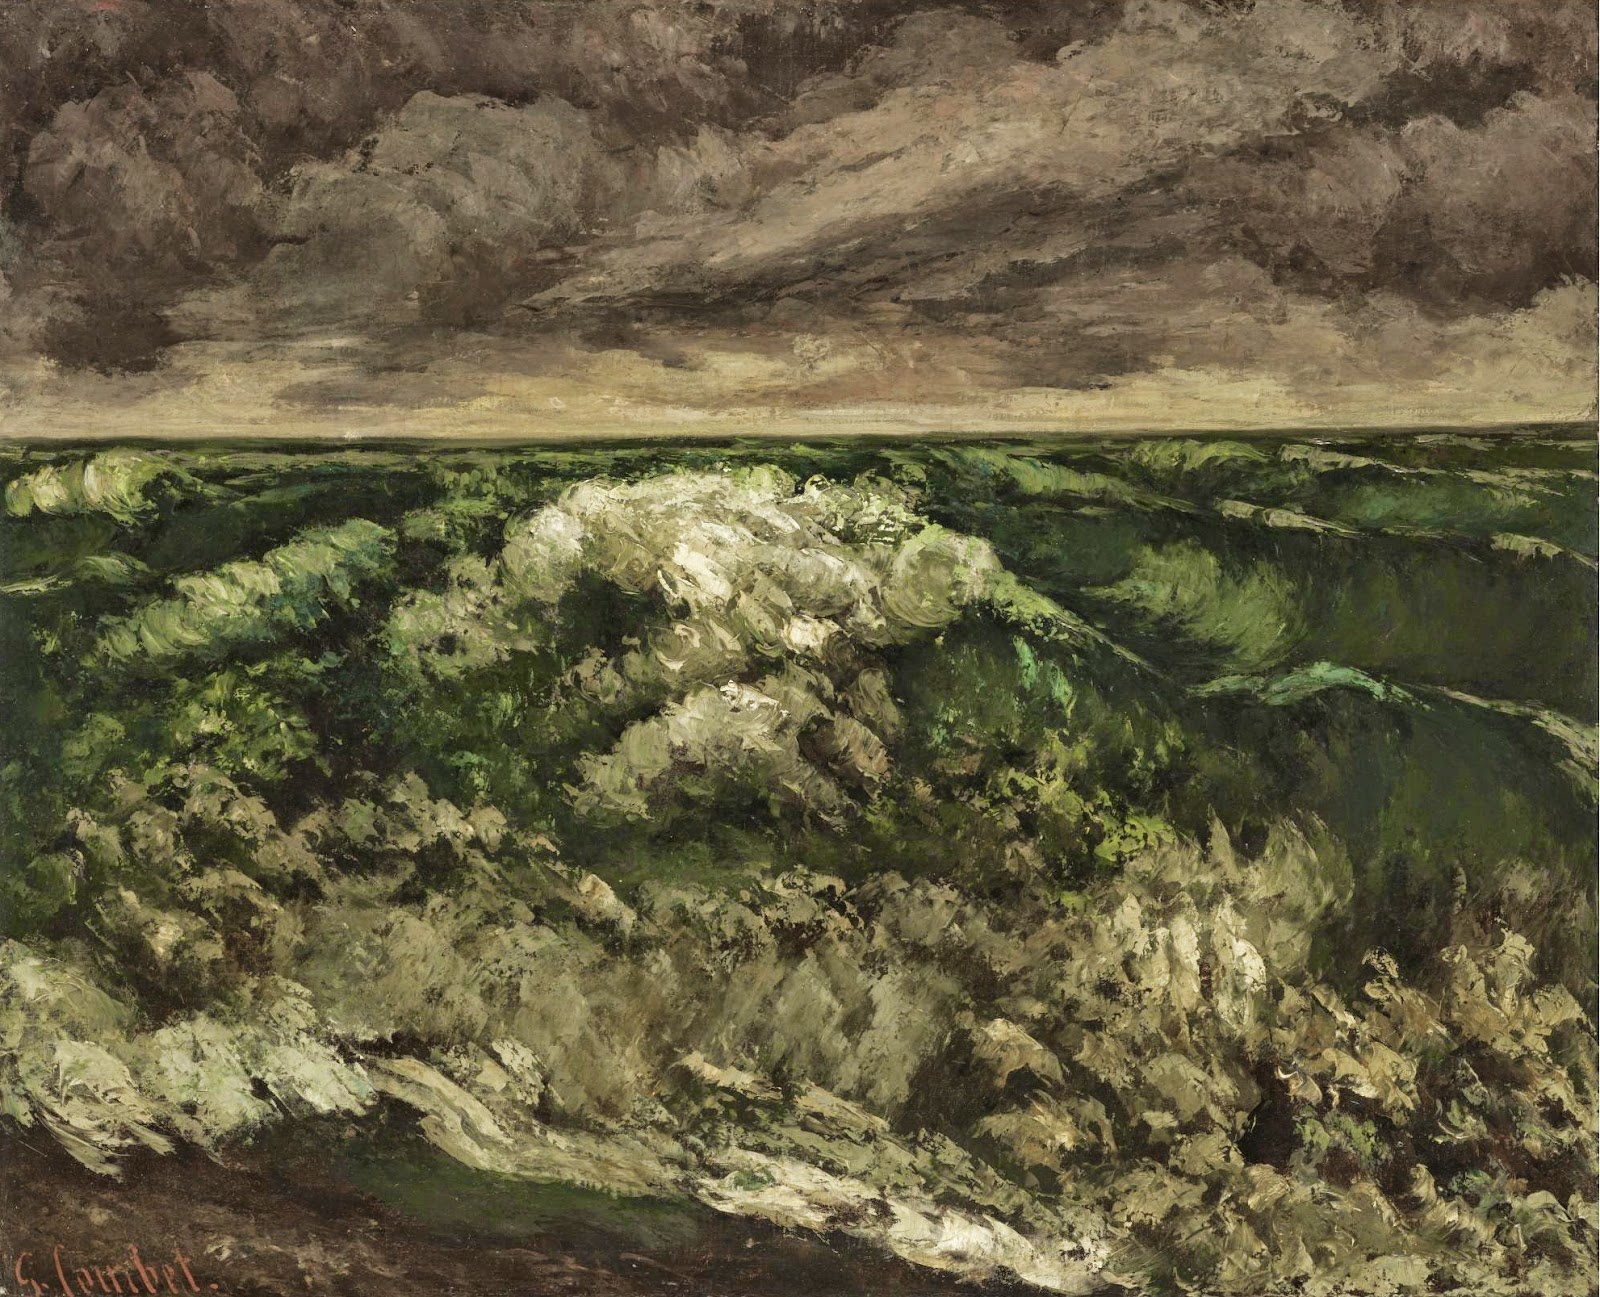 Gustave+Courbet-1819-1877 (69).jpg